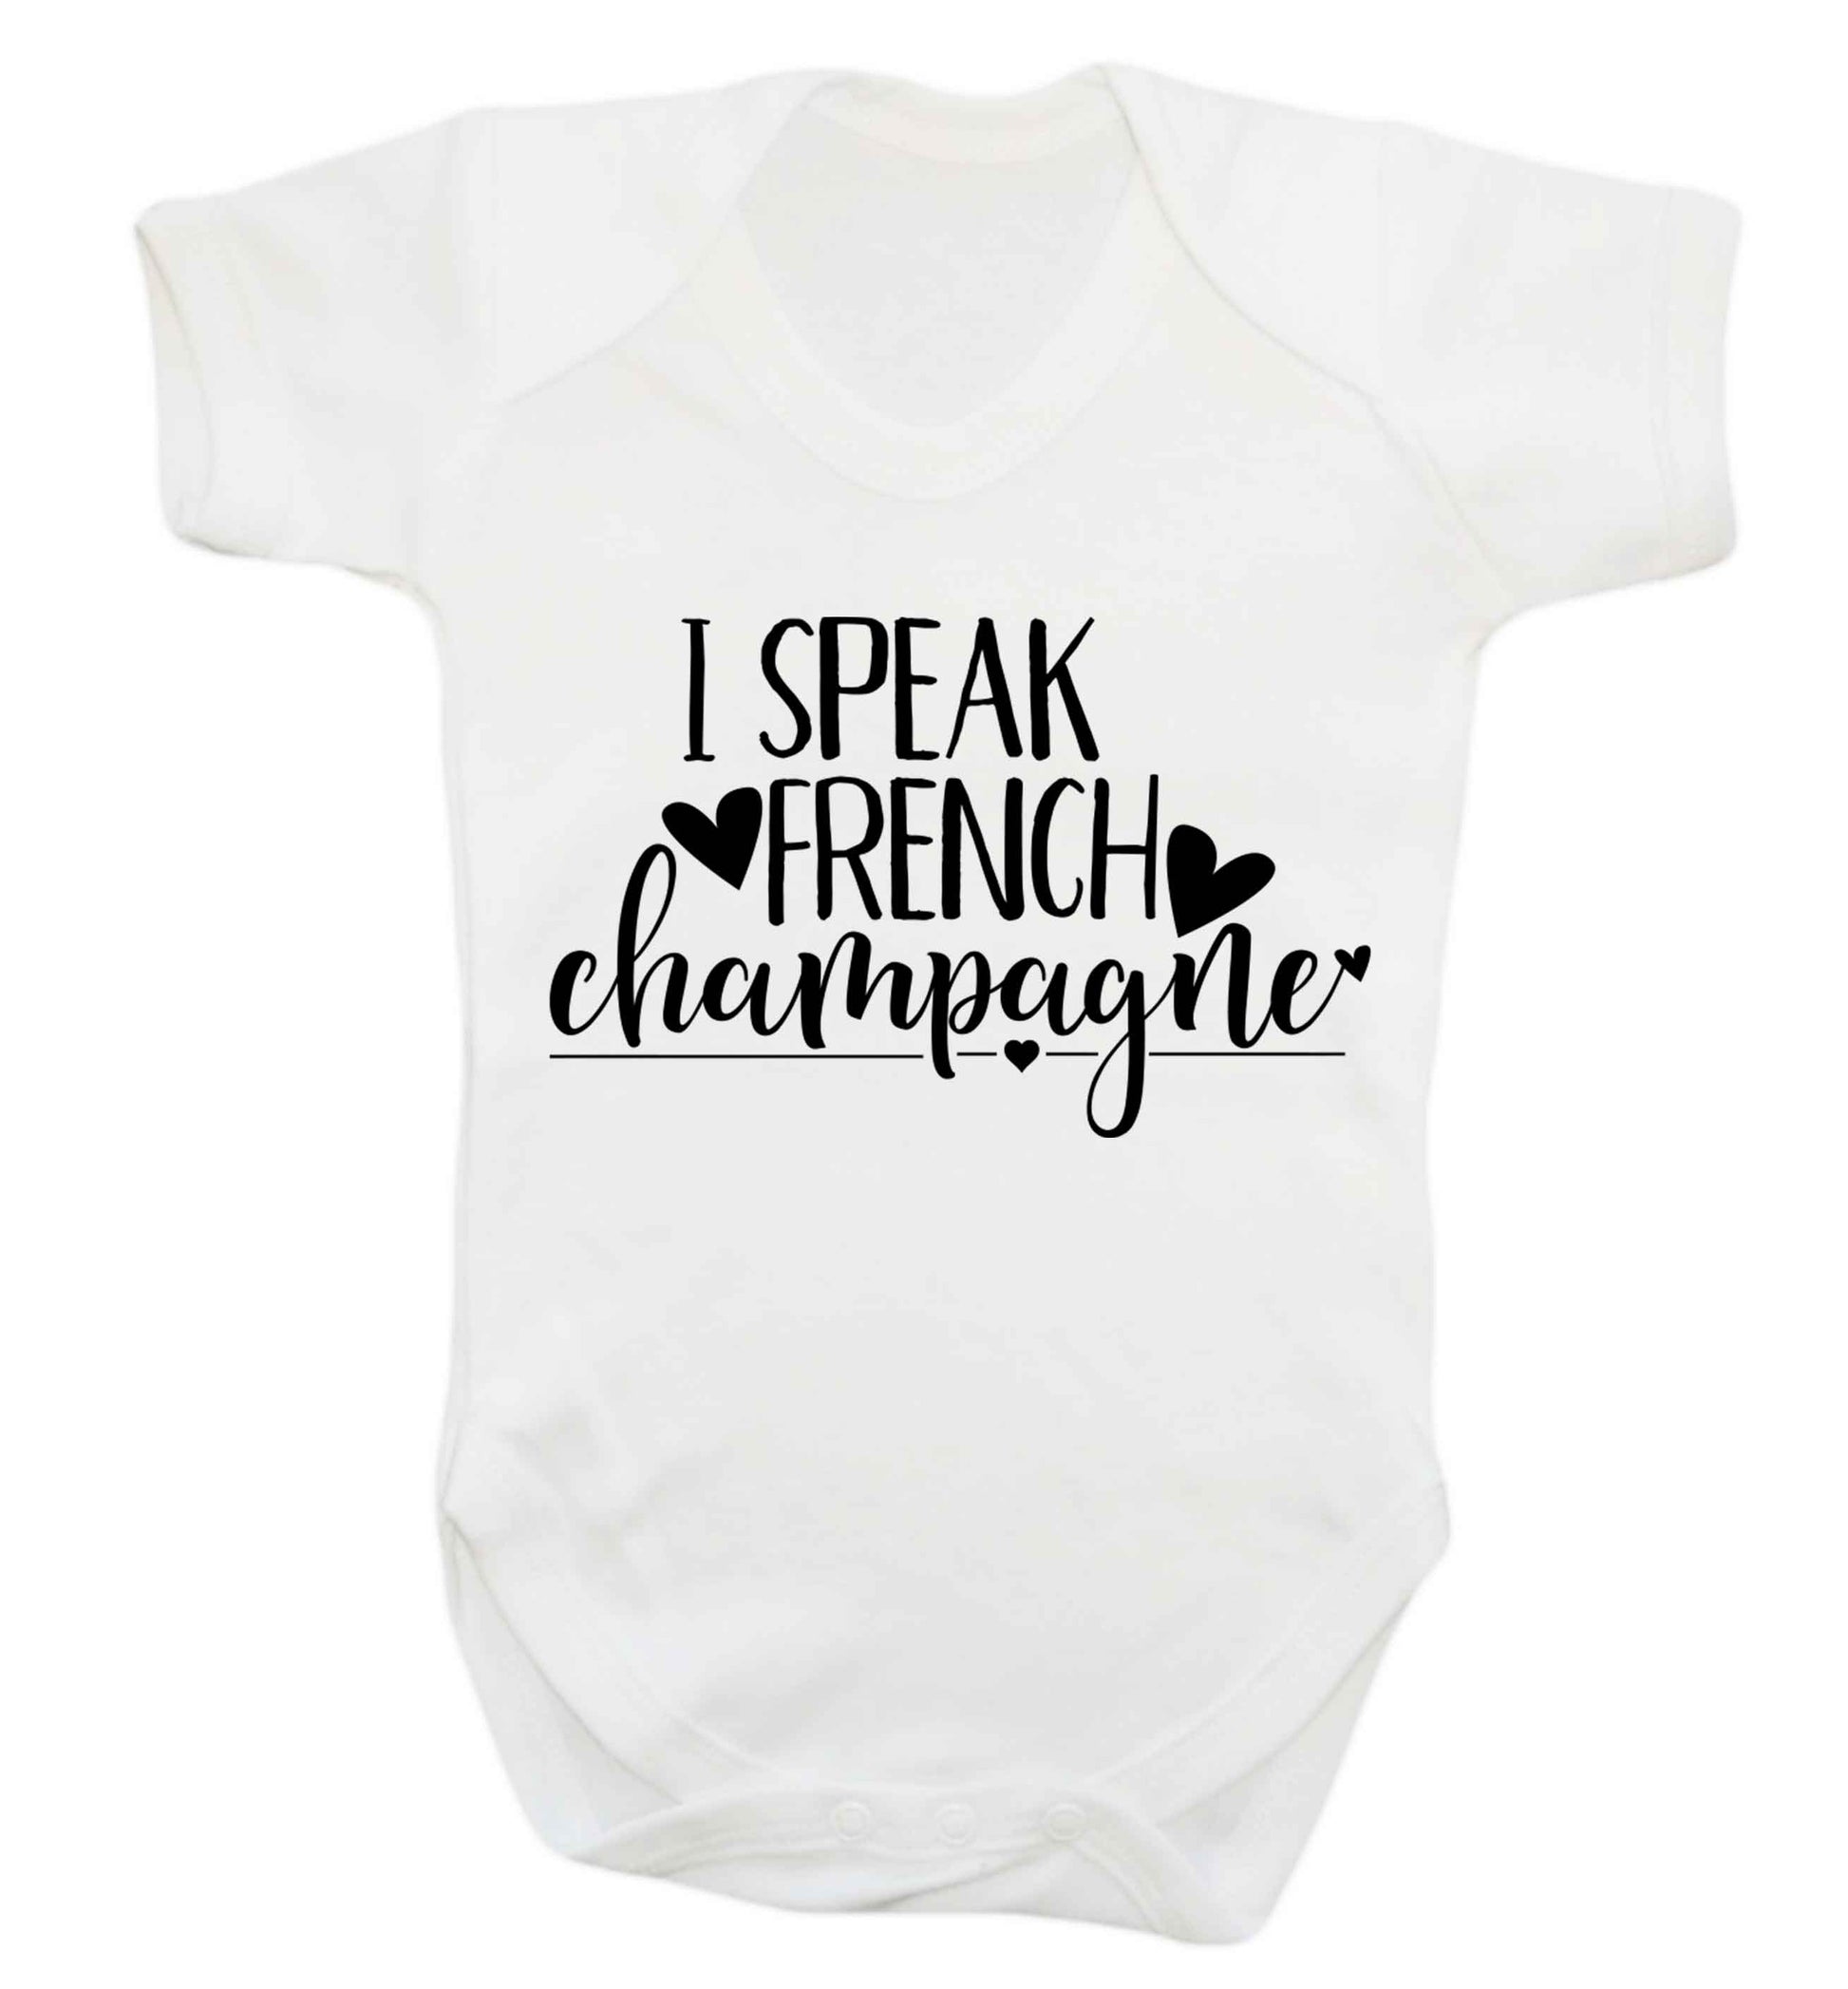 I speak french champagne Baby Vest white 18-24 months